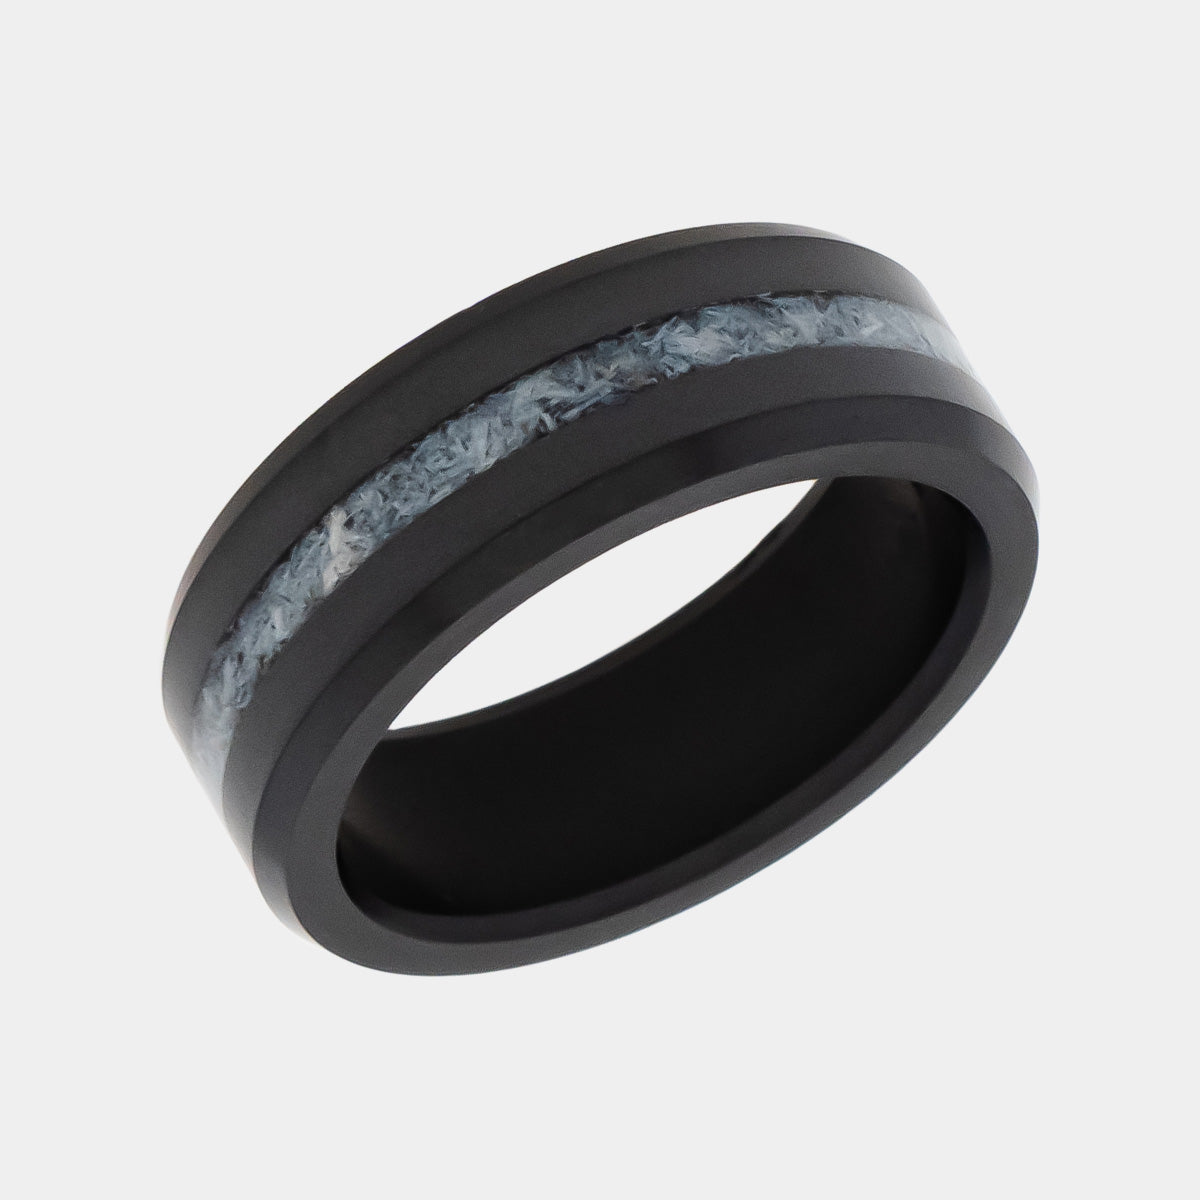 Men's Black Diamond & Authentic Antler Ring with a white background | Elysium ARES | Black Diamond Ring | Antler Rings | Rings Made from Antlers | Wedding Rings for Him